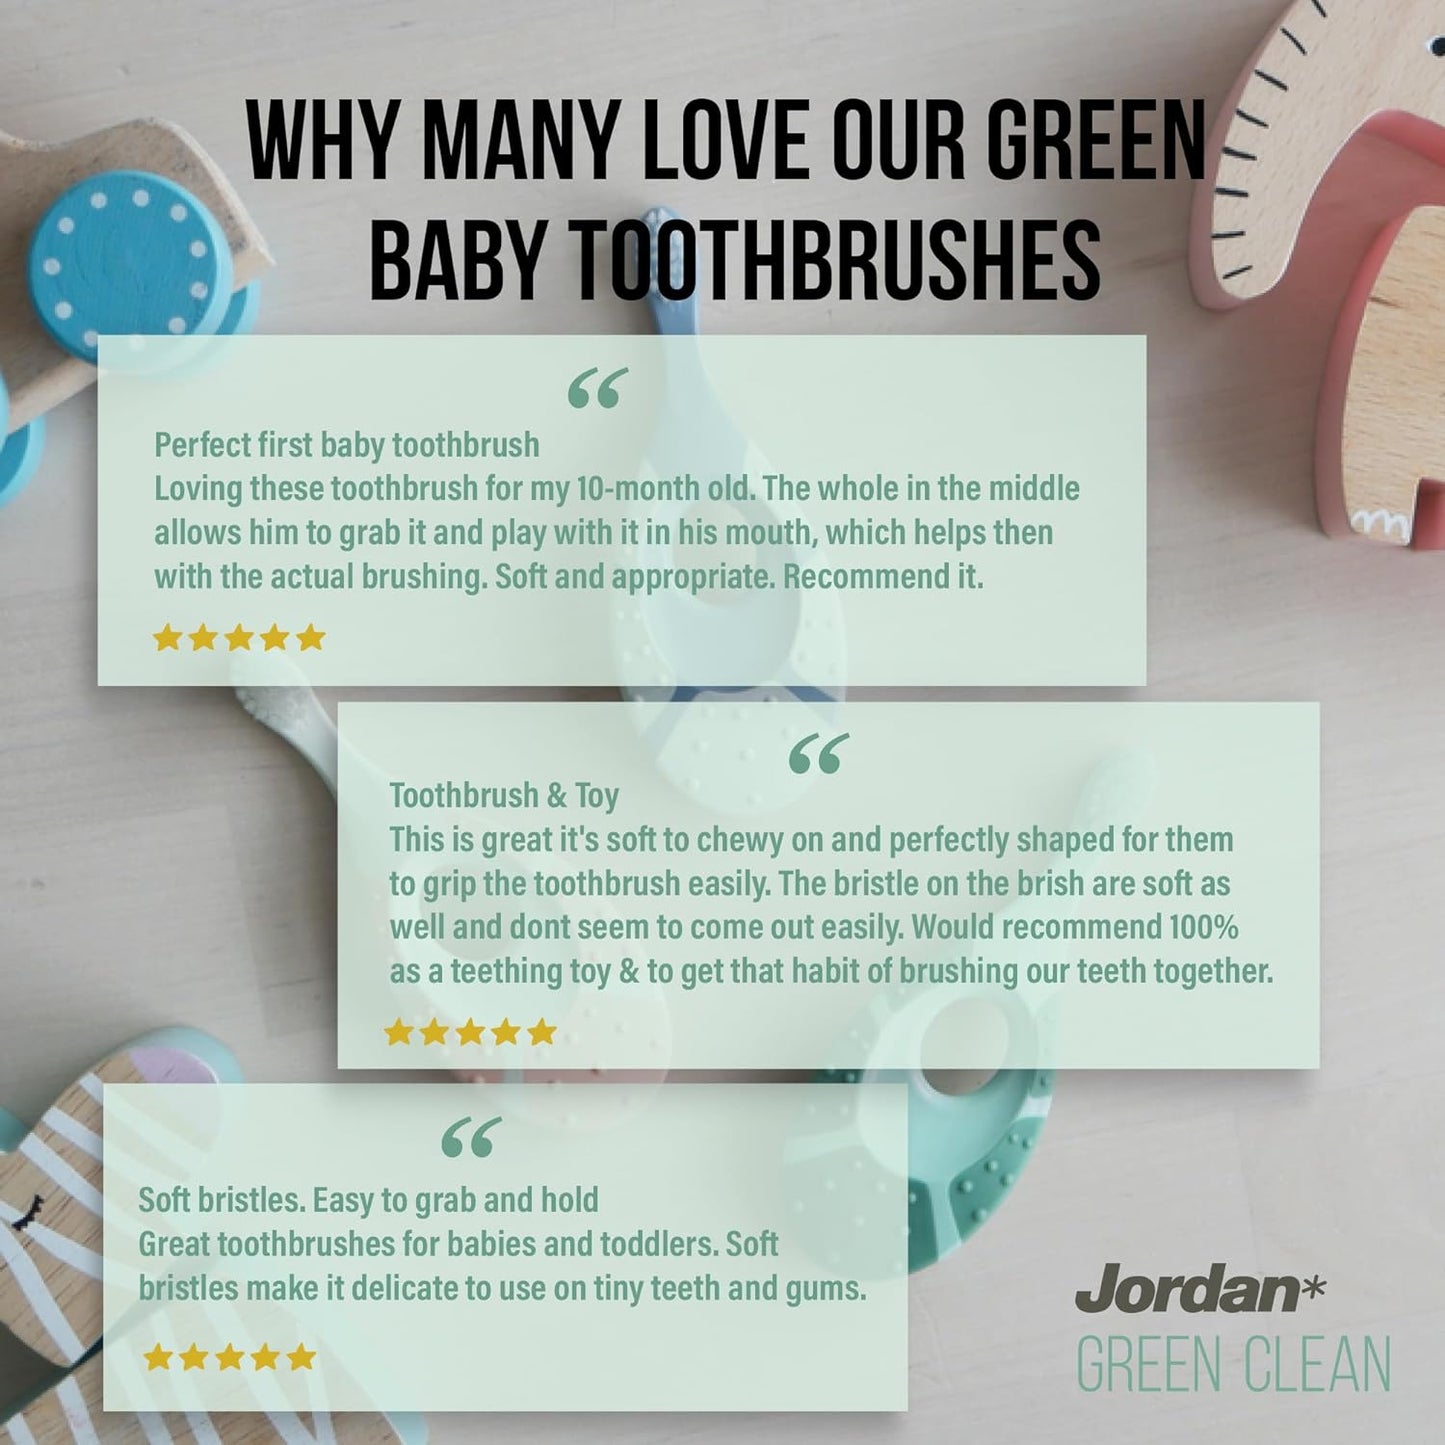 Jordan* ® | Step 1 Baby Toothbrush | 0-2 Years, Soft Bristles, BPA Free | 4 Pack